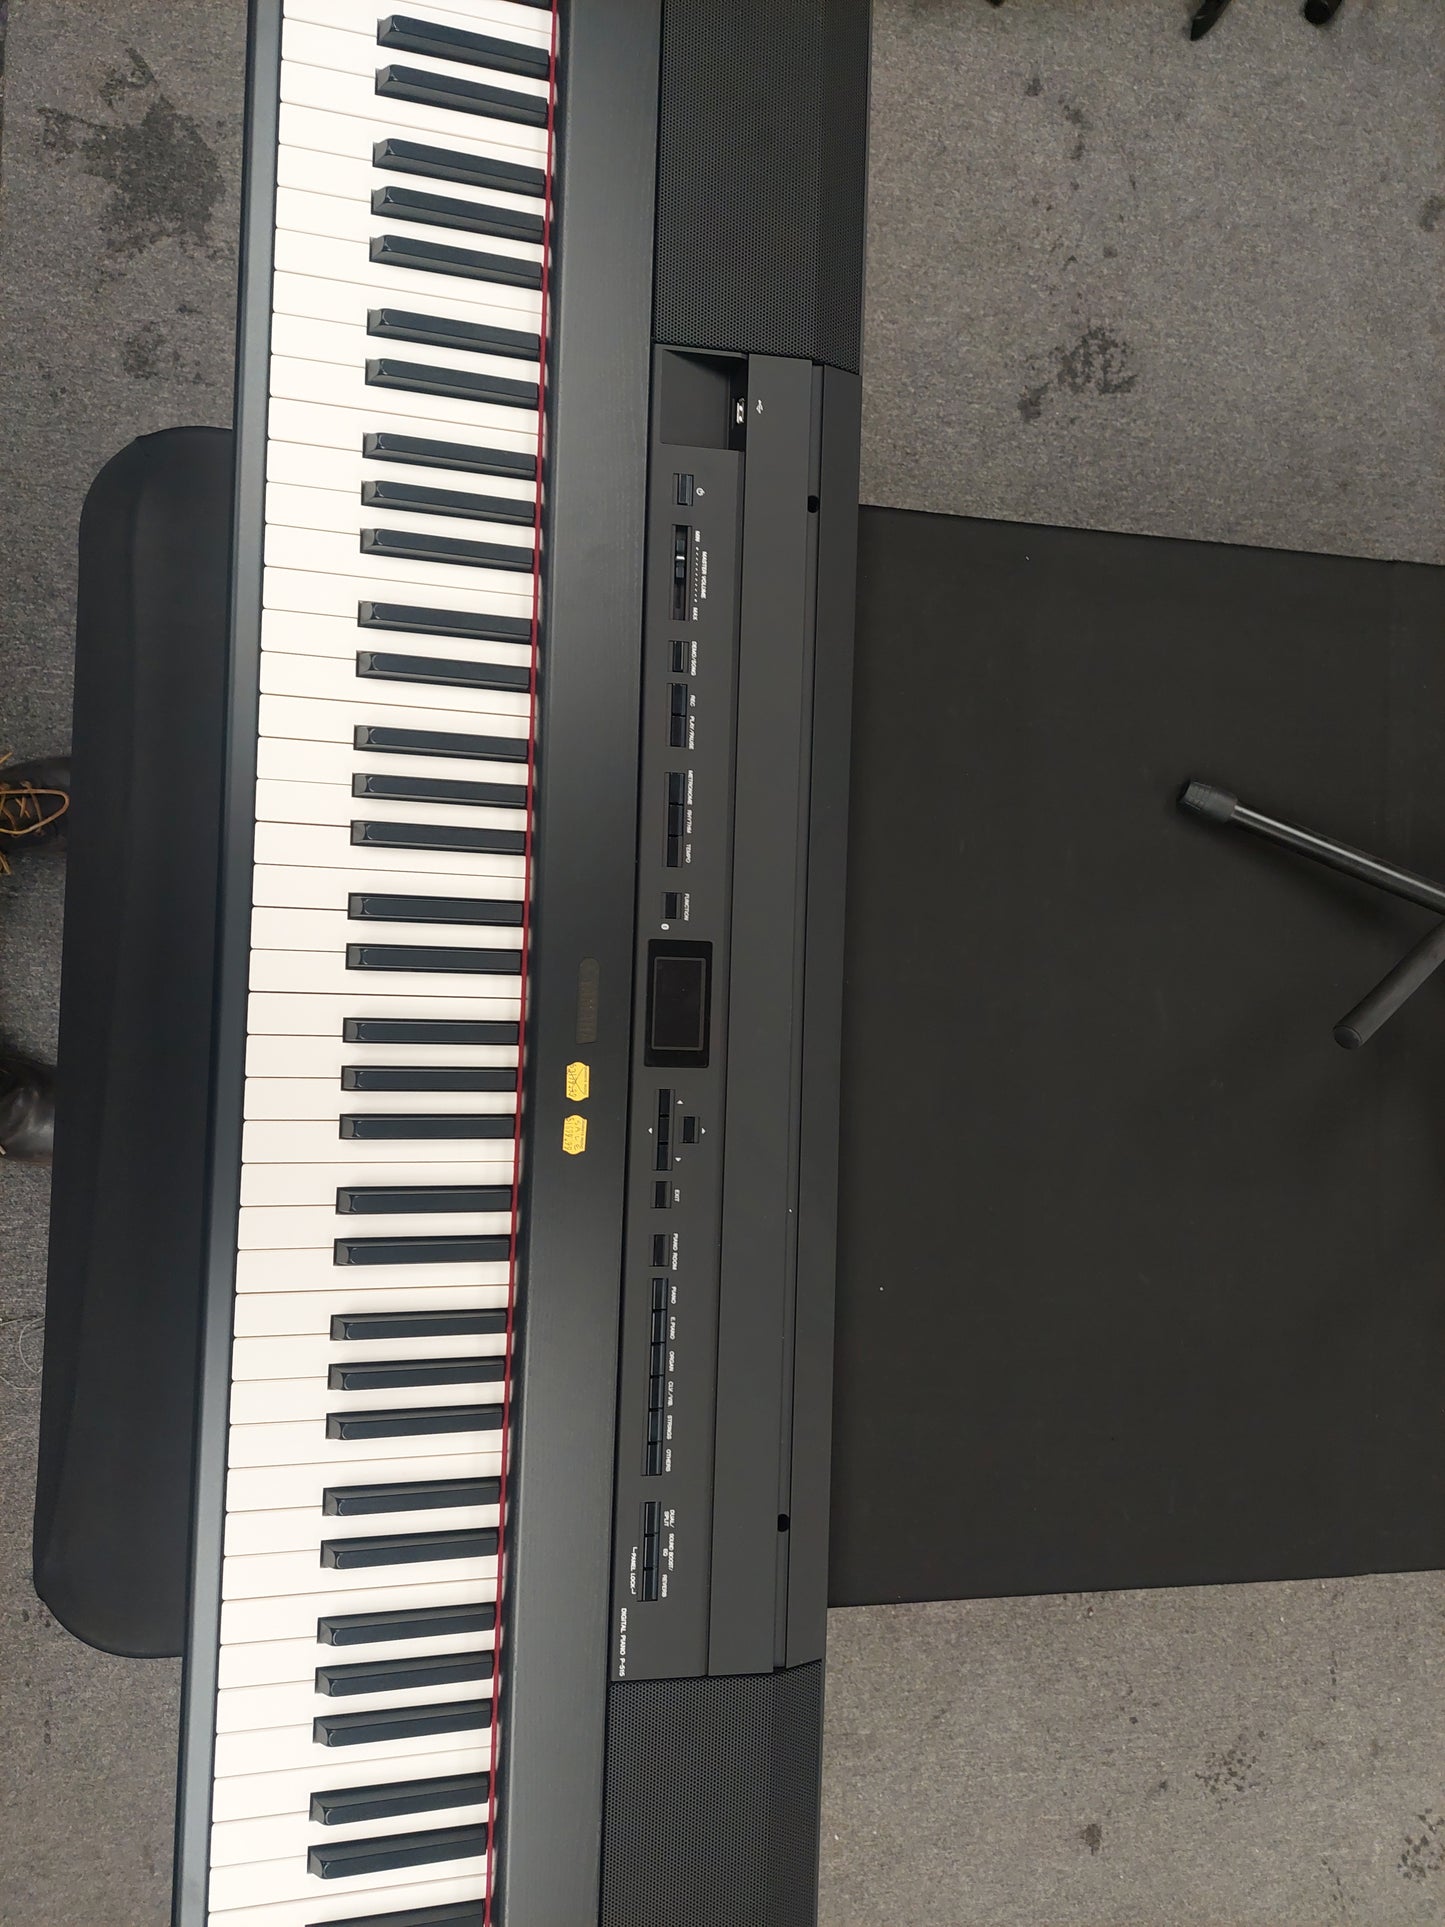 Yamaha P-515 88-Key Digital Piano w/Speakers - Black